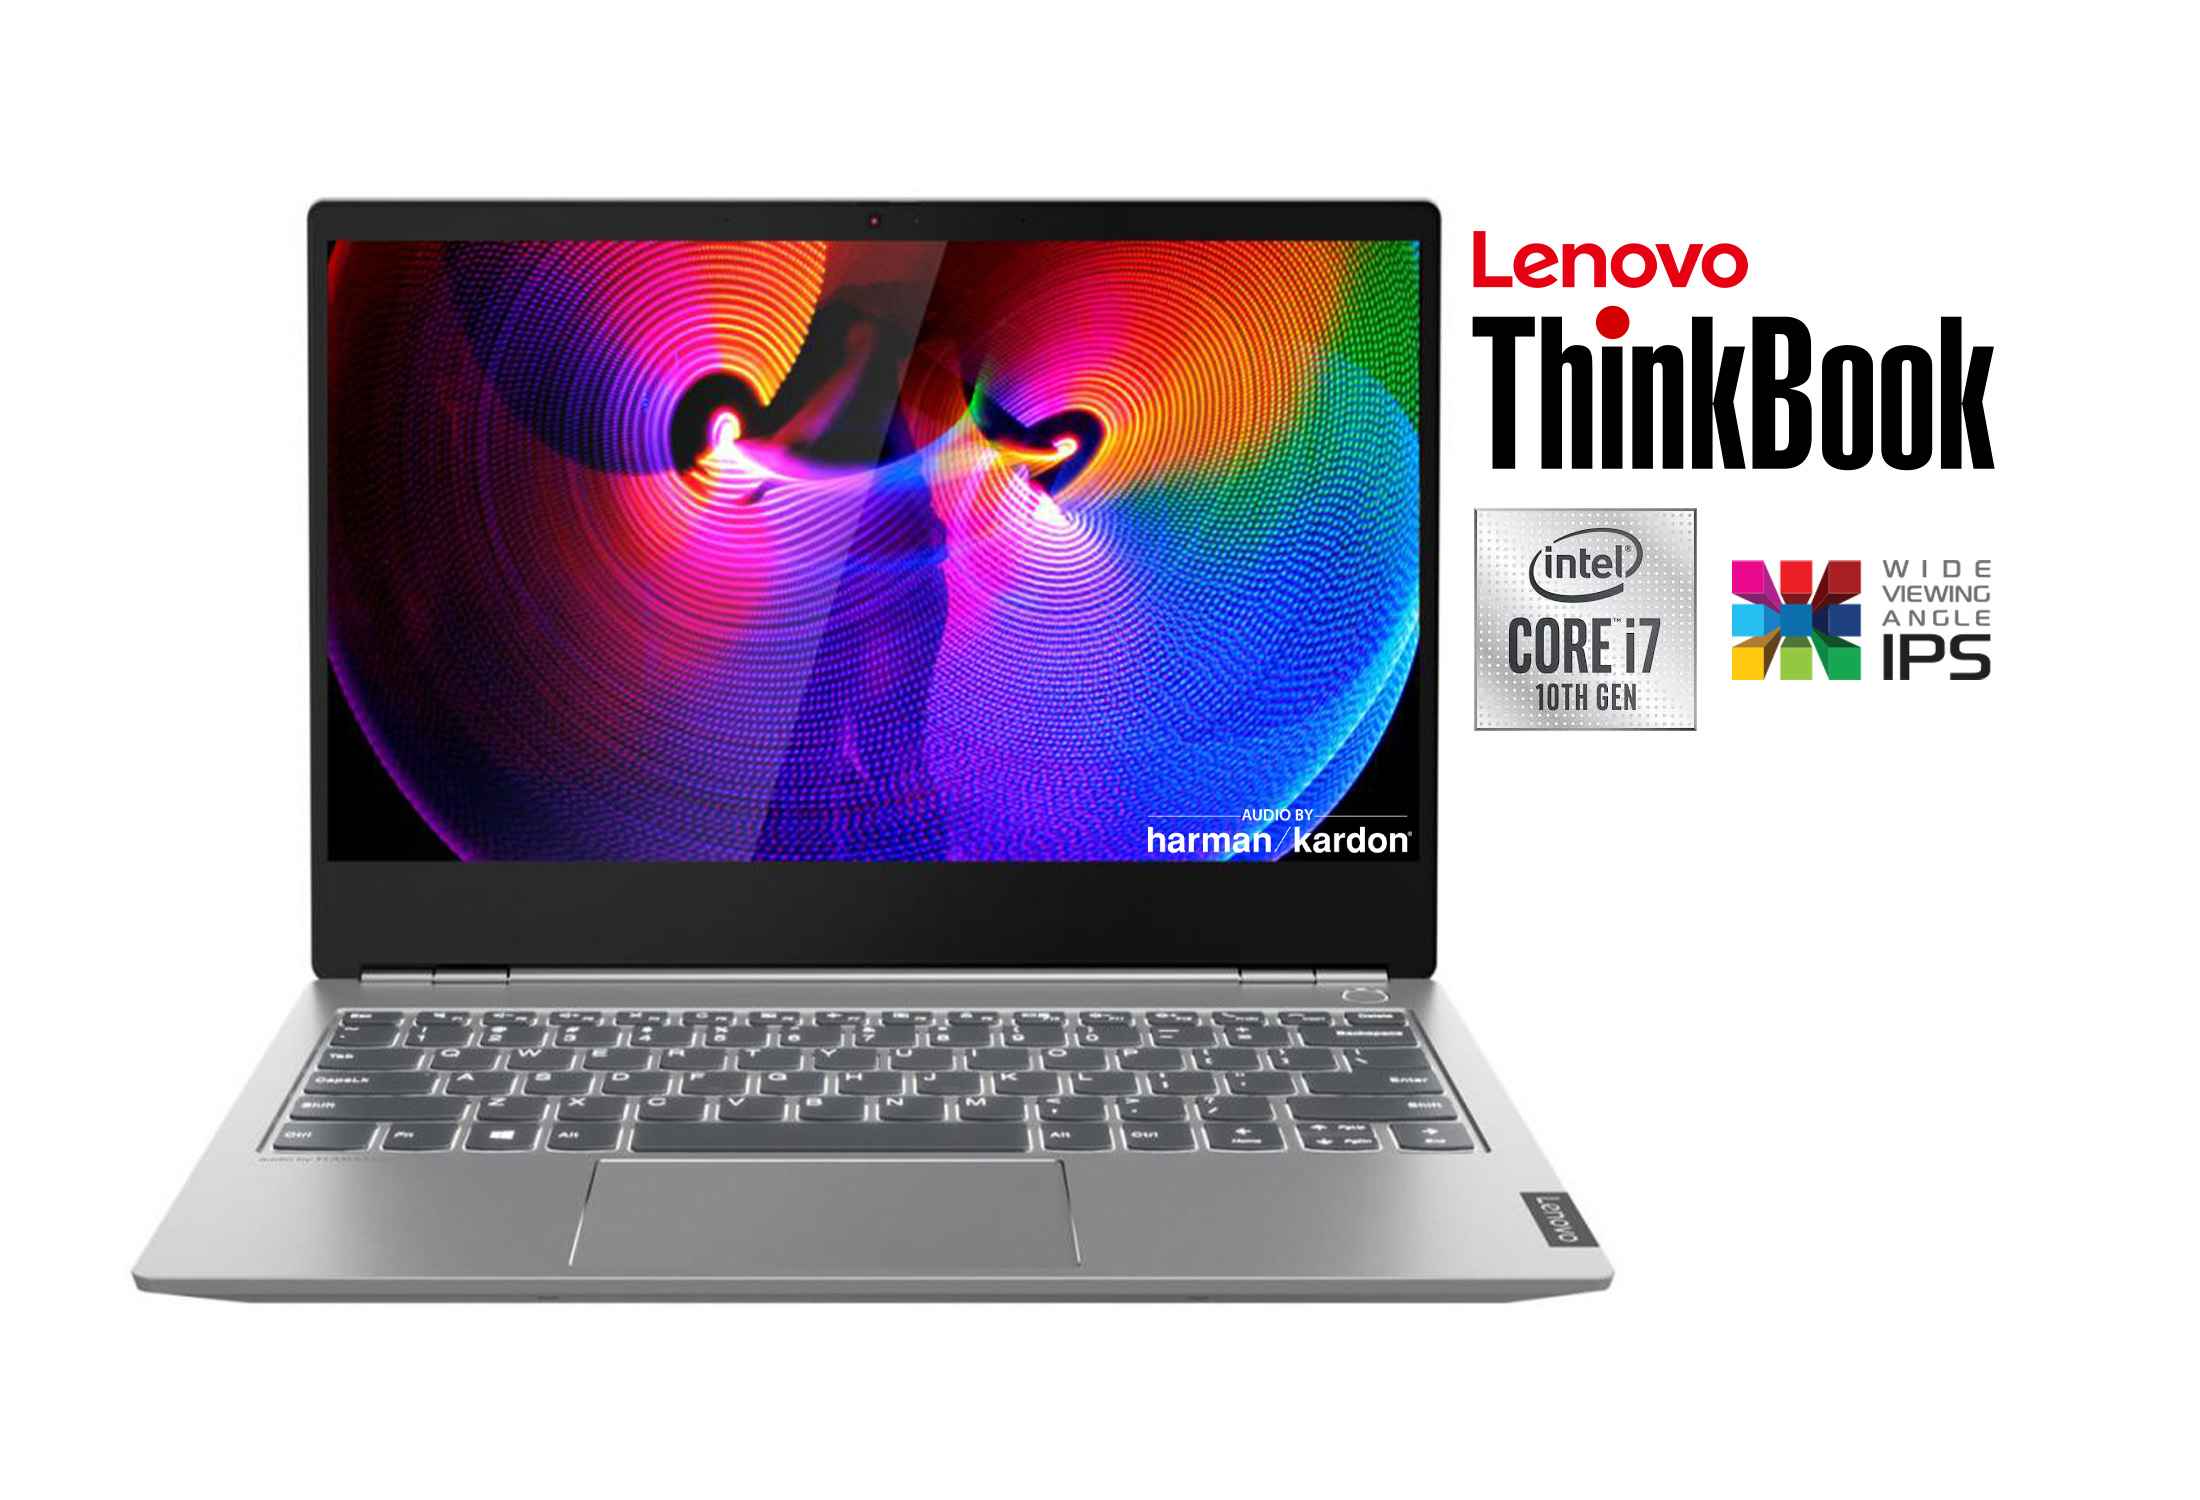 Lenovo ThinkBook 13s i7-10510U 16GB RAM 512GB NVMe FHD IPS-peyXm.jpeg